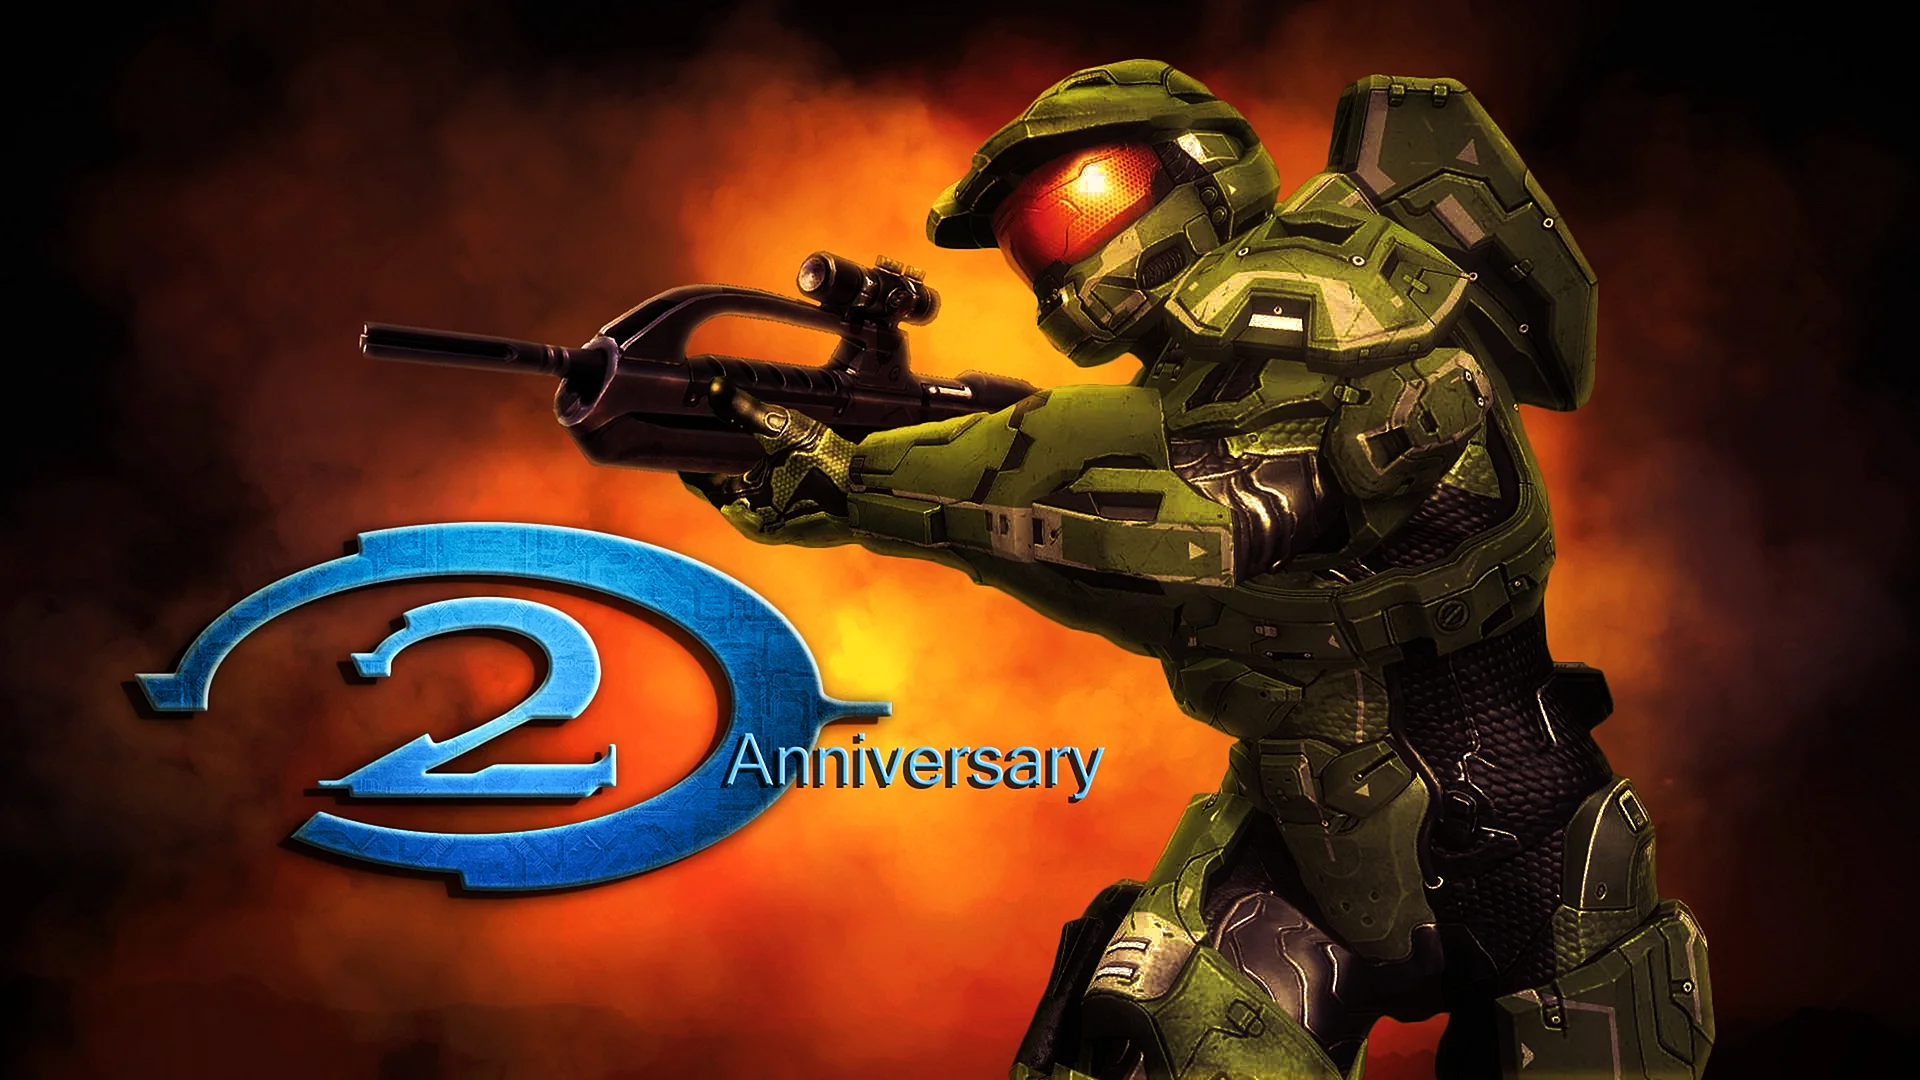 Halo 2 Anniversary Wallpaper